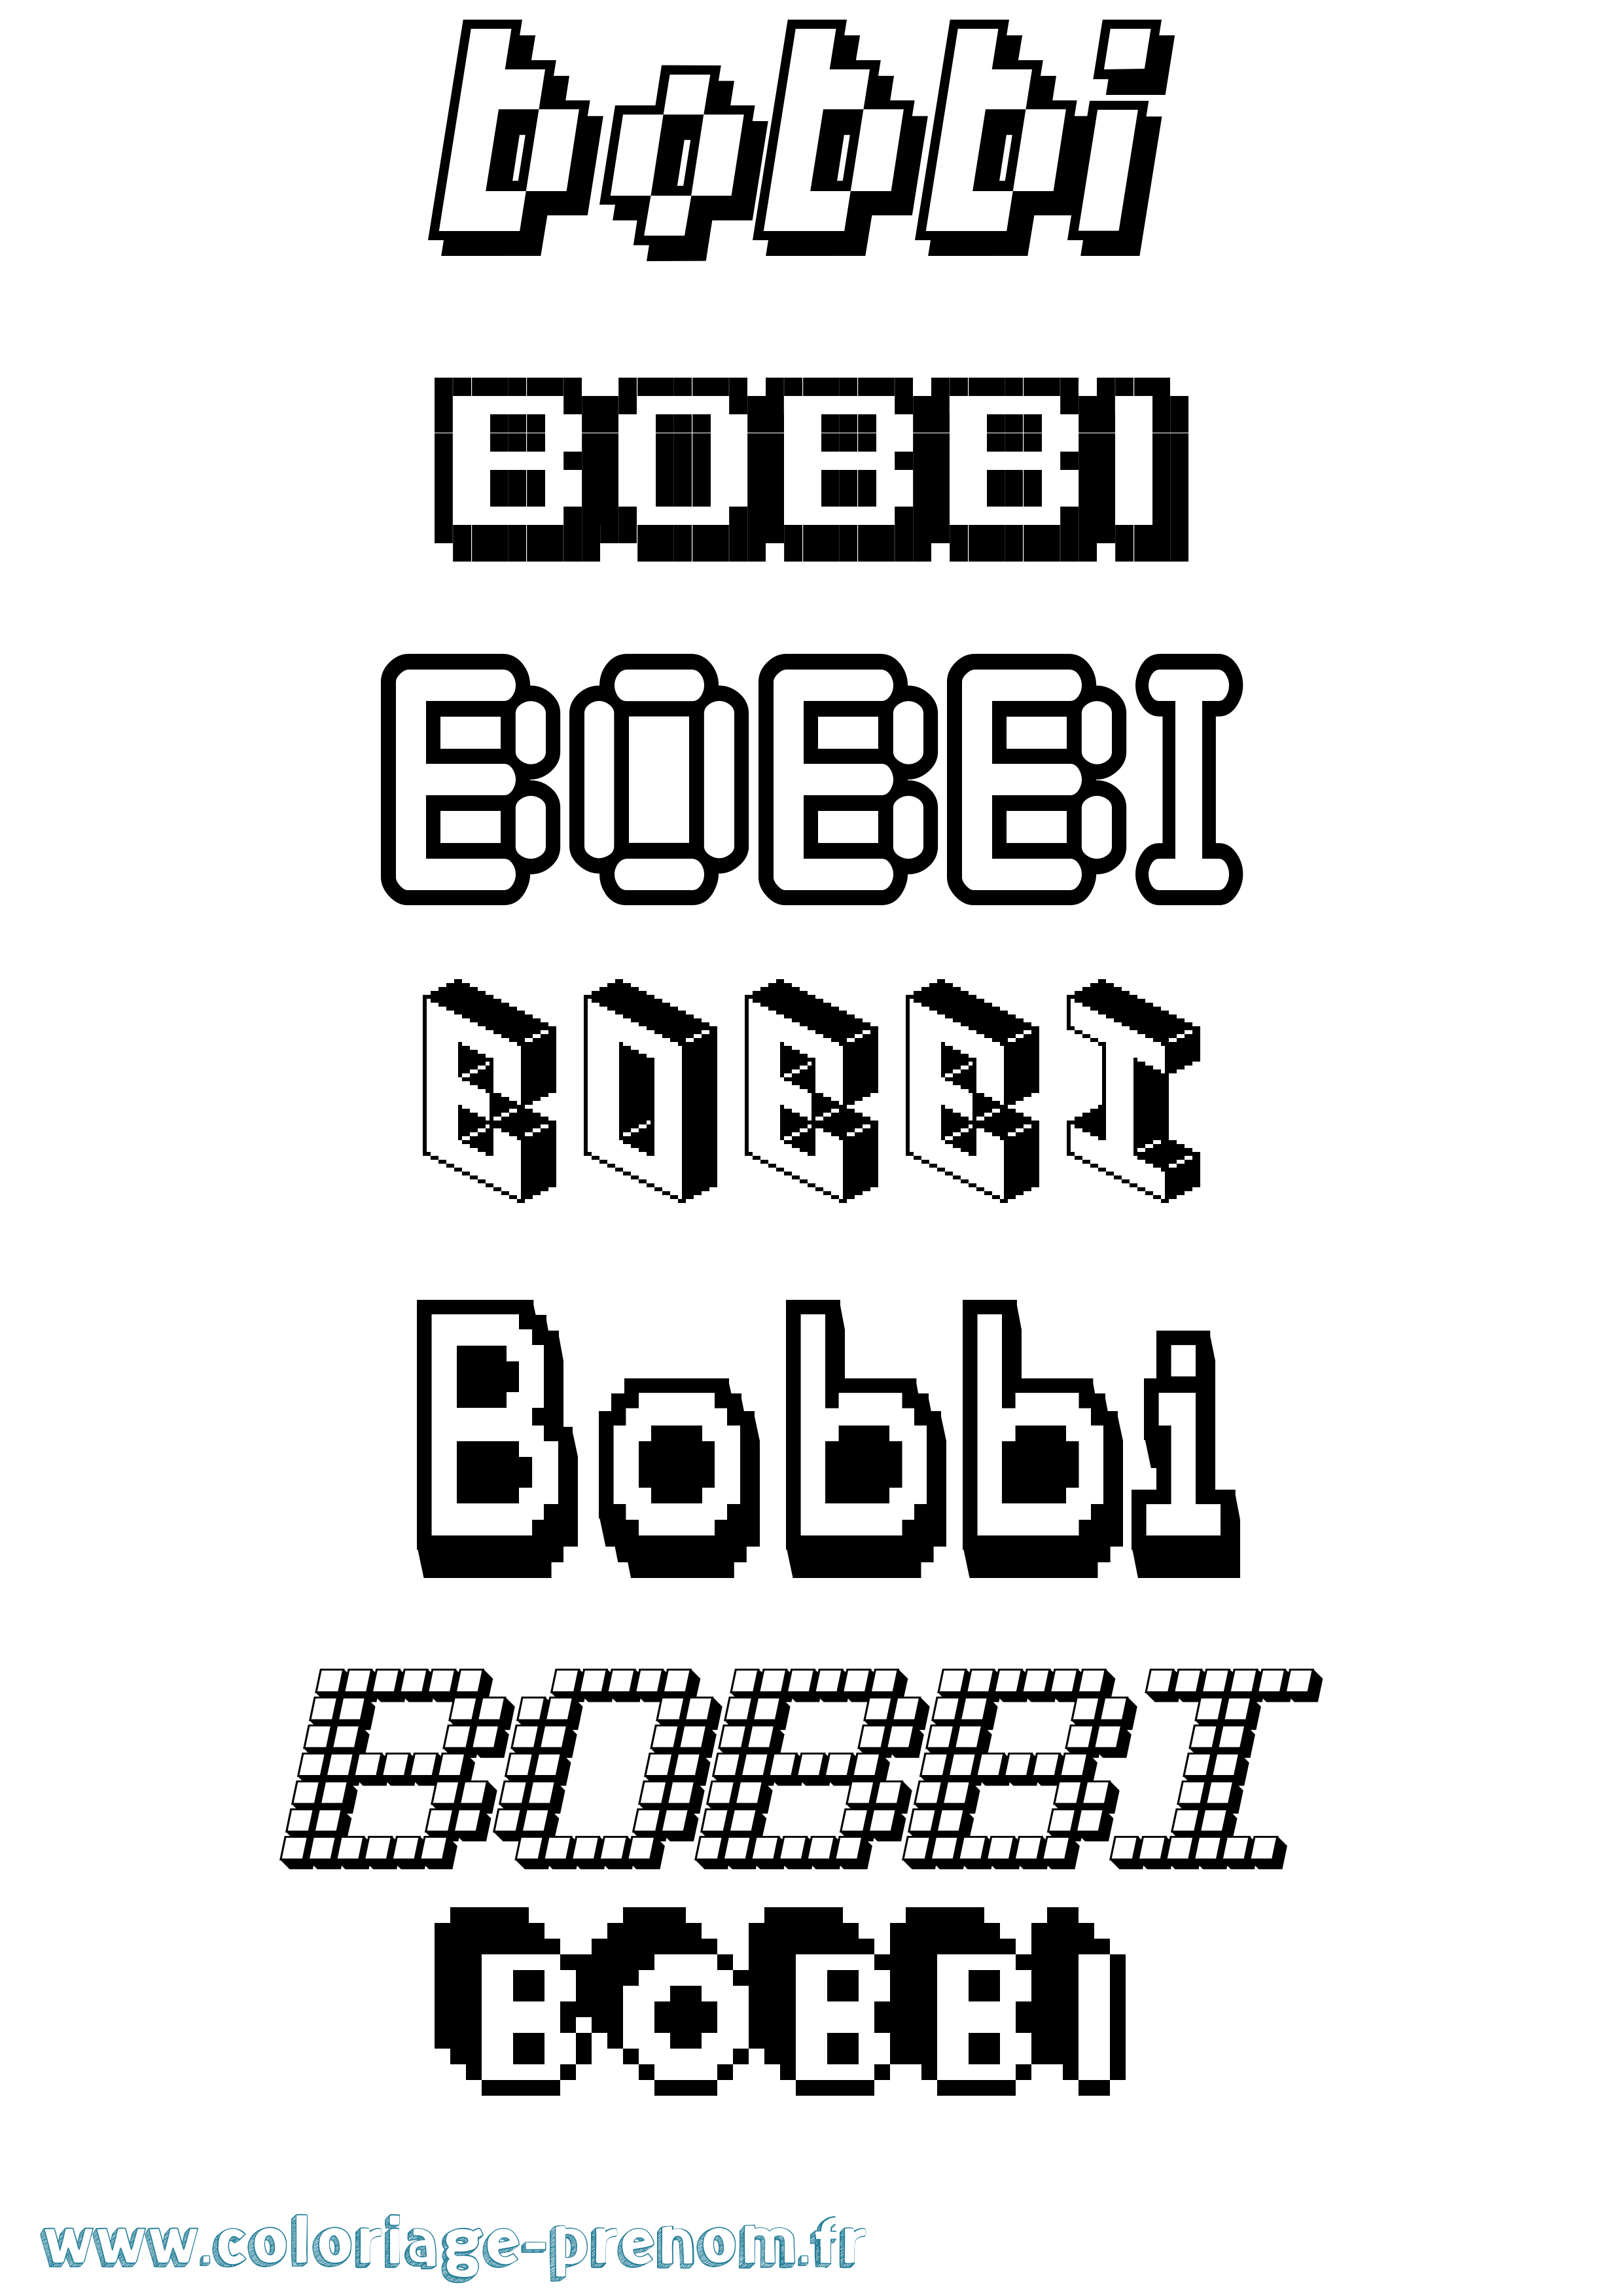 Coloriage prénom Bobbi Pixel